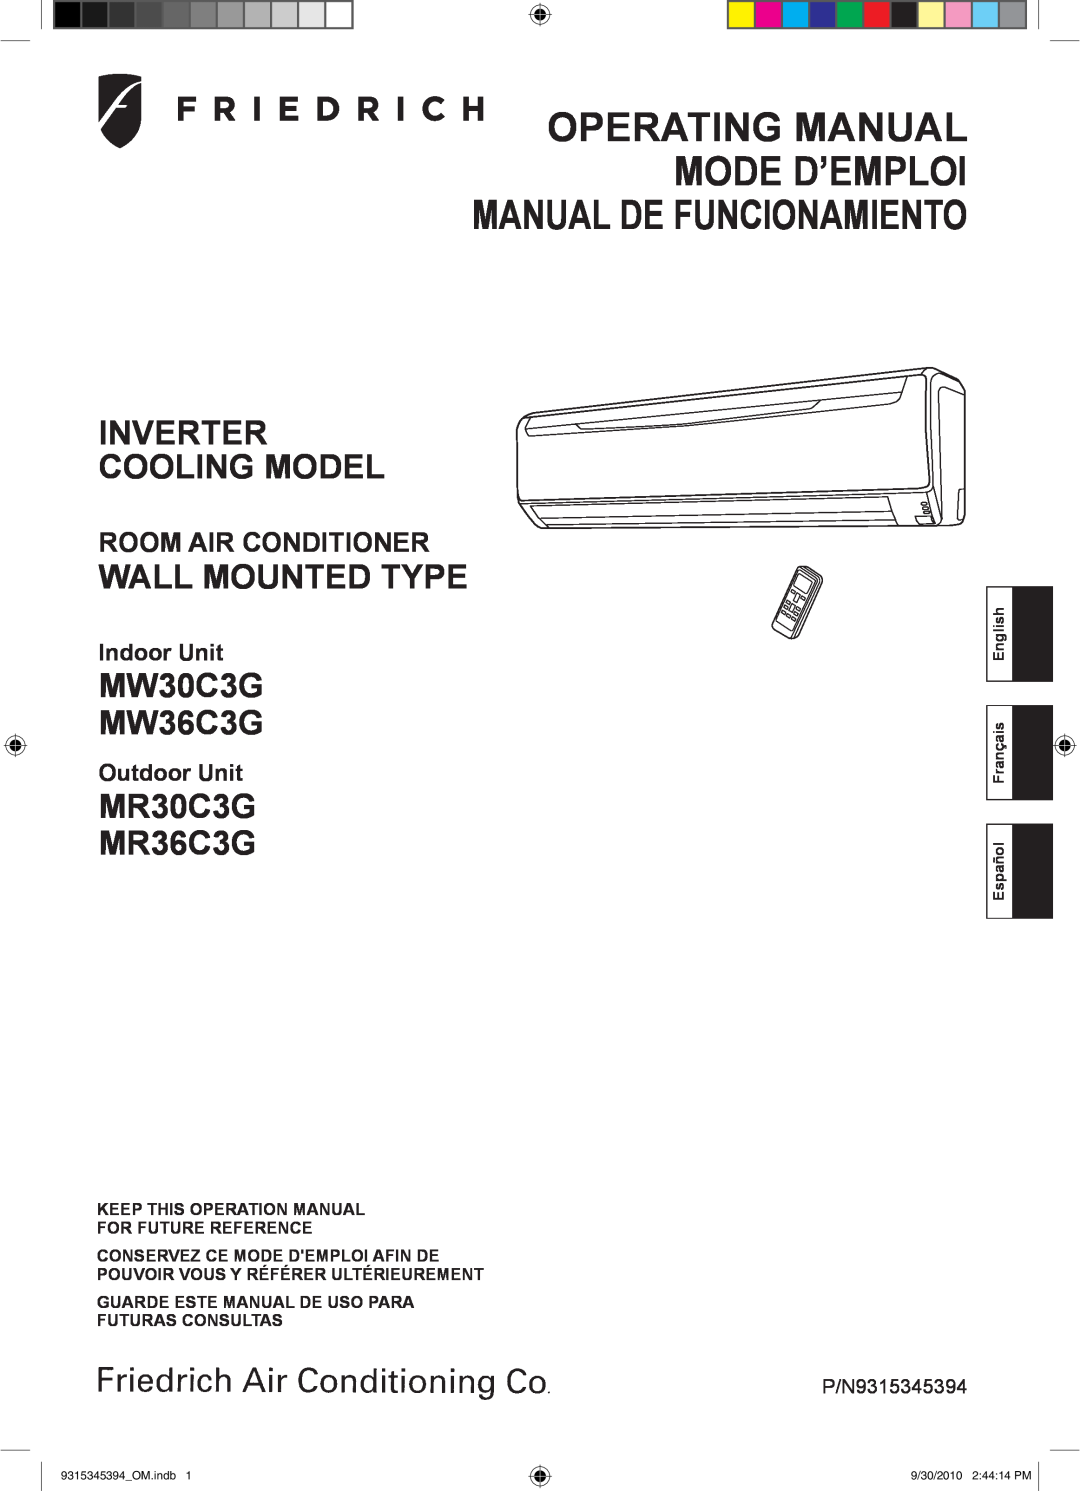 Friedrich operation manual Inverter Cooling Model, Wall Mounted Type, MW30C3G MW36C3G, MR30C3G MR36C3G, Indoor Unit 